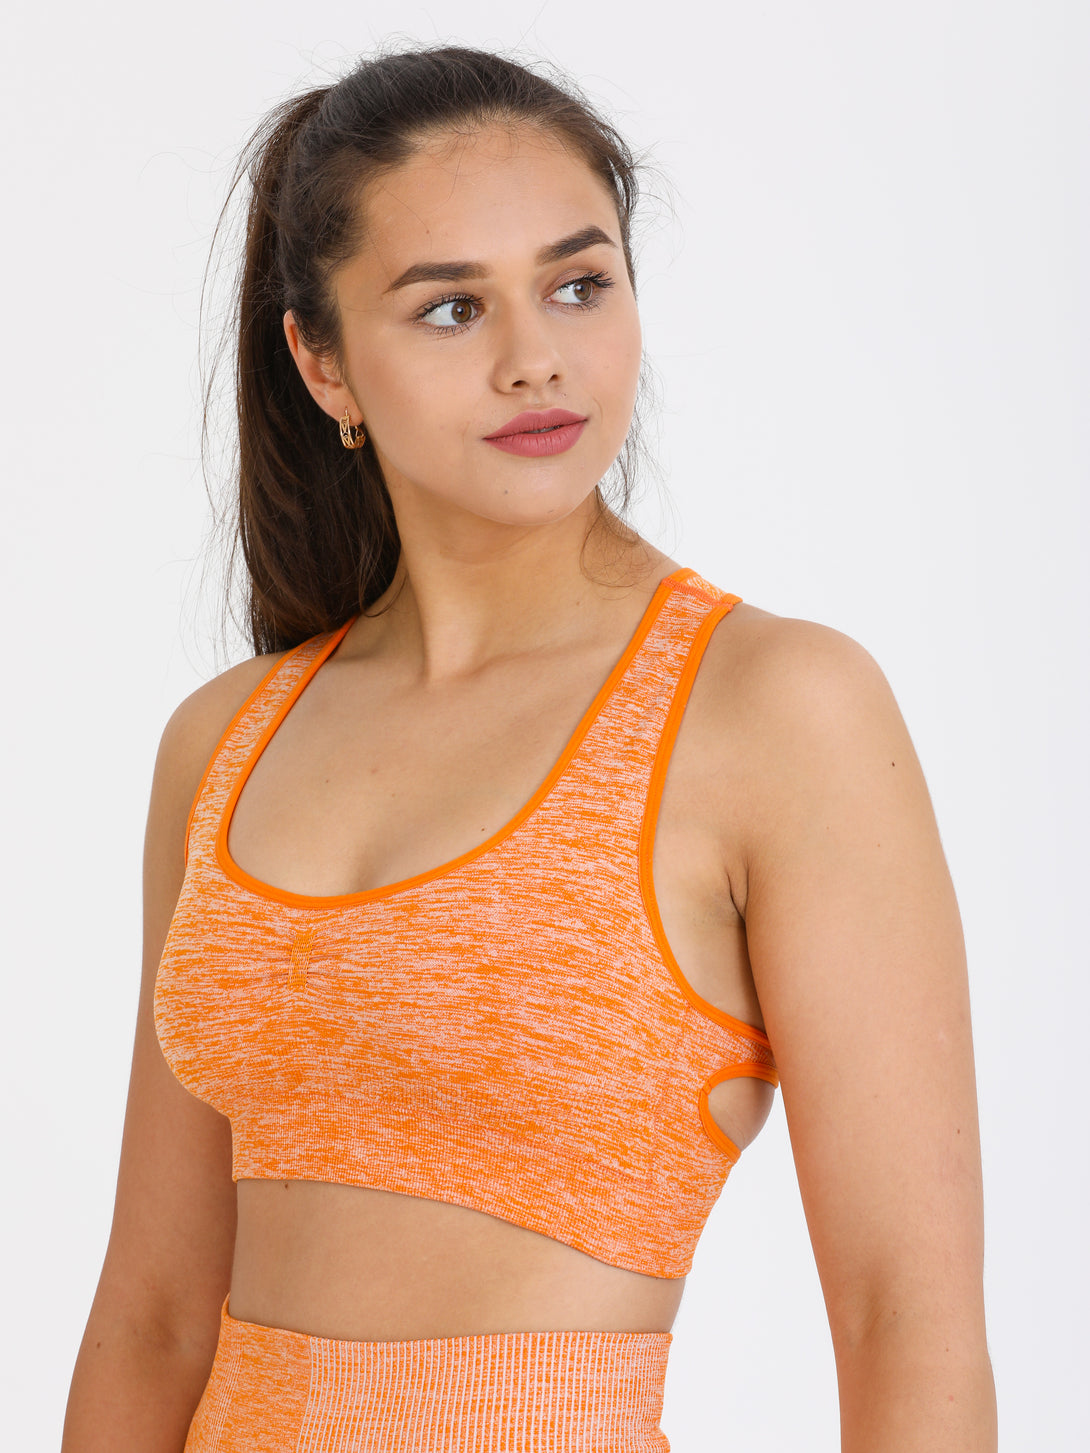 A Woman Wearing Orange Color Seamless Medium Support Sports Bra